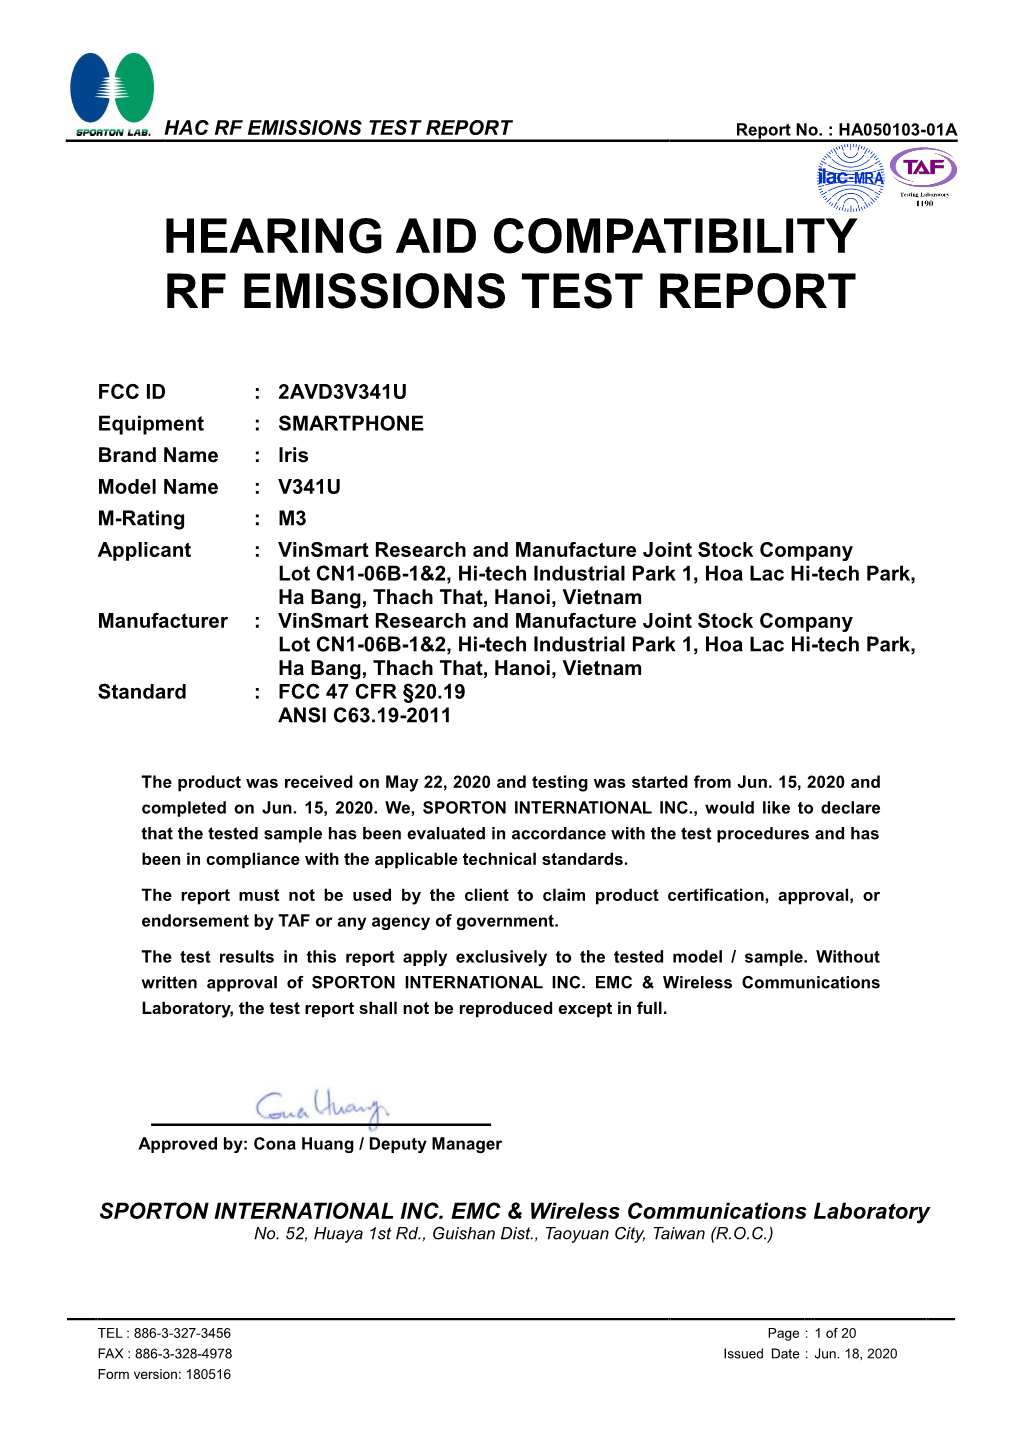 Hearing Aid Compatibility Rf Emissions Test Report